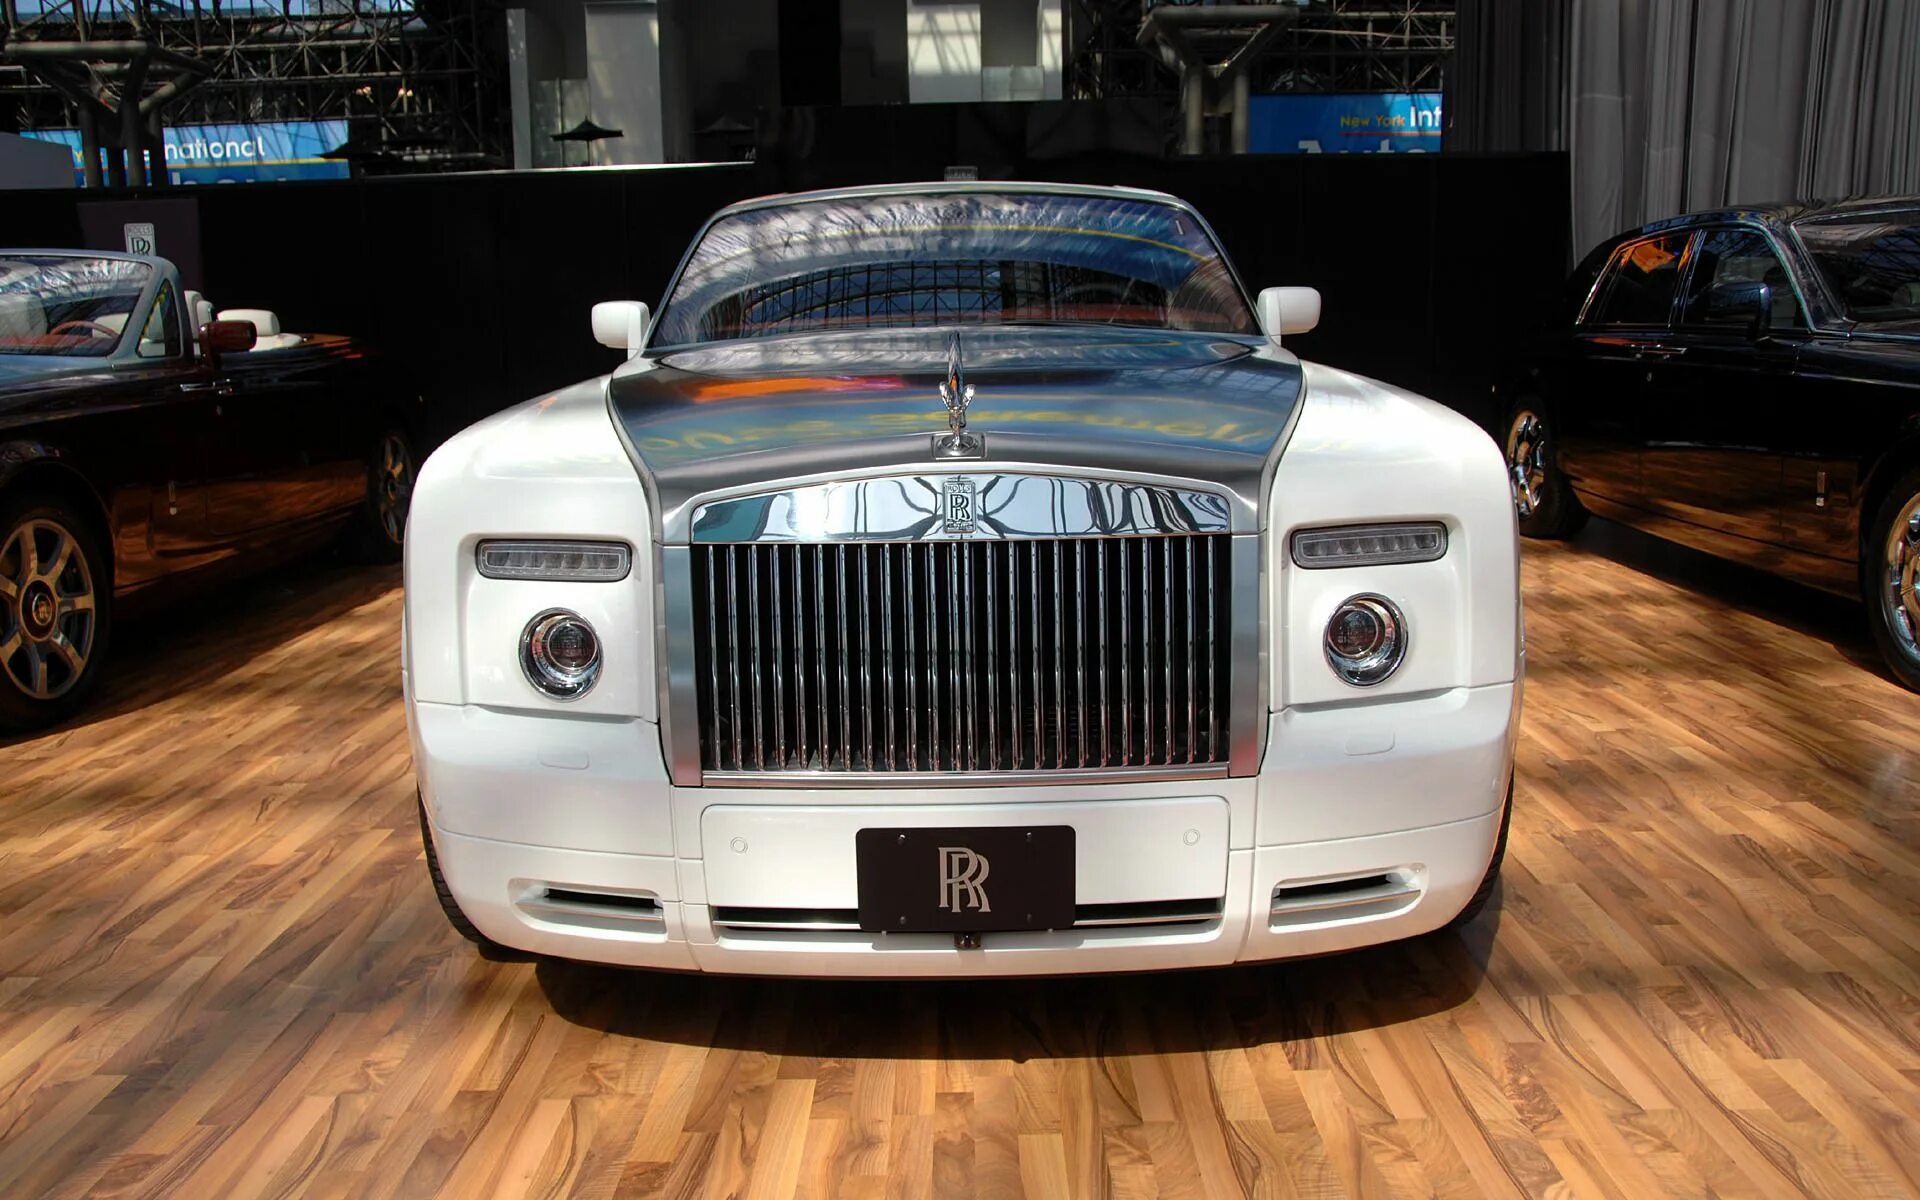 Авто роллс. Машина Роллс Ройс. Rolls Royce машина Rolls Royce. Роллс Ройс 2000. Роллс Ройс 1861.